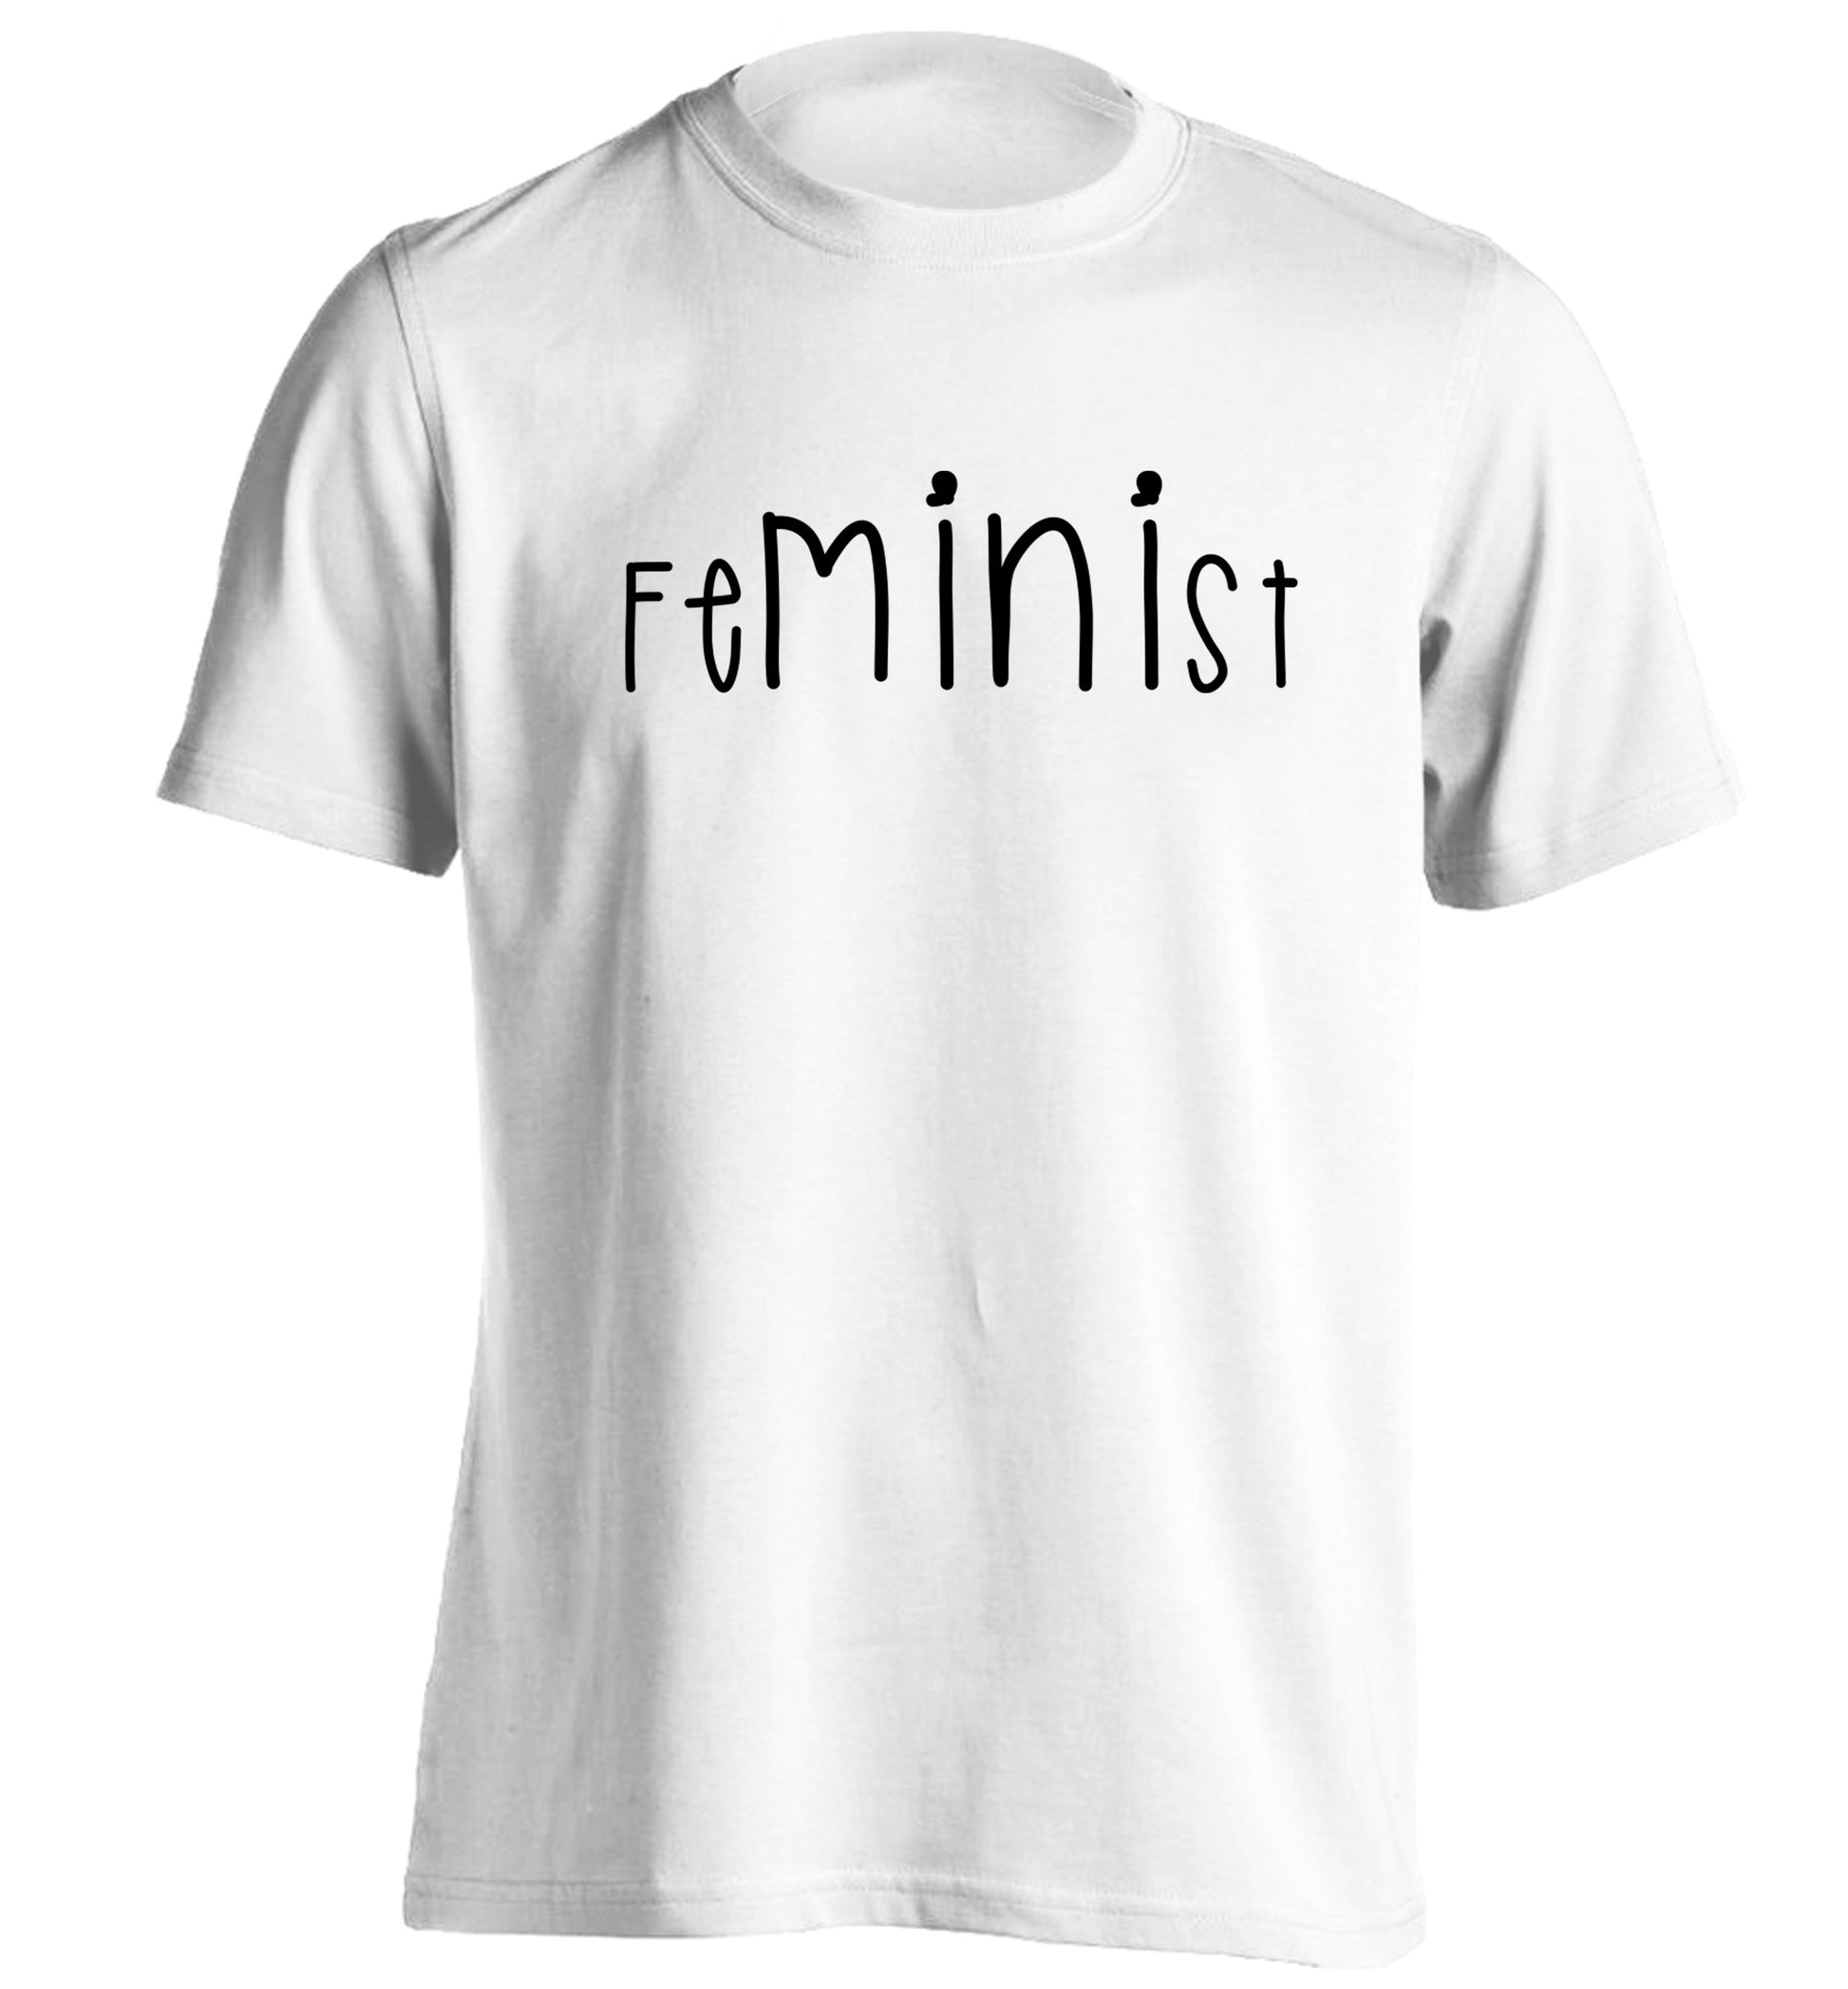 FeMINIst adults unisex white Tshirt 2XL